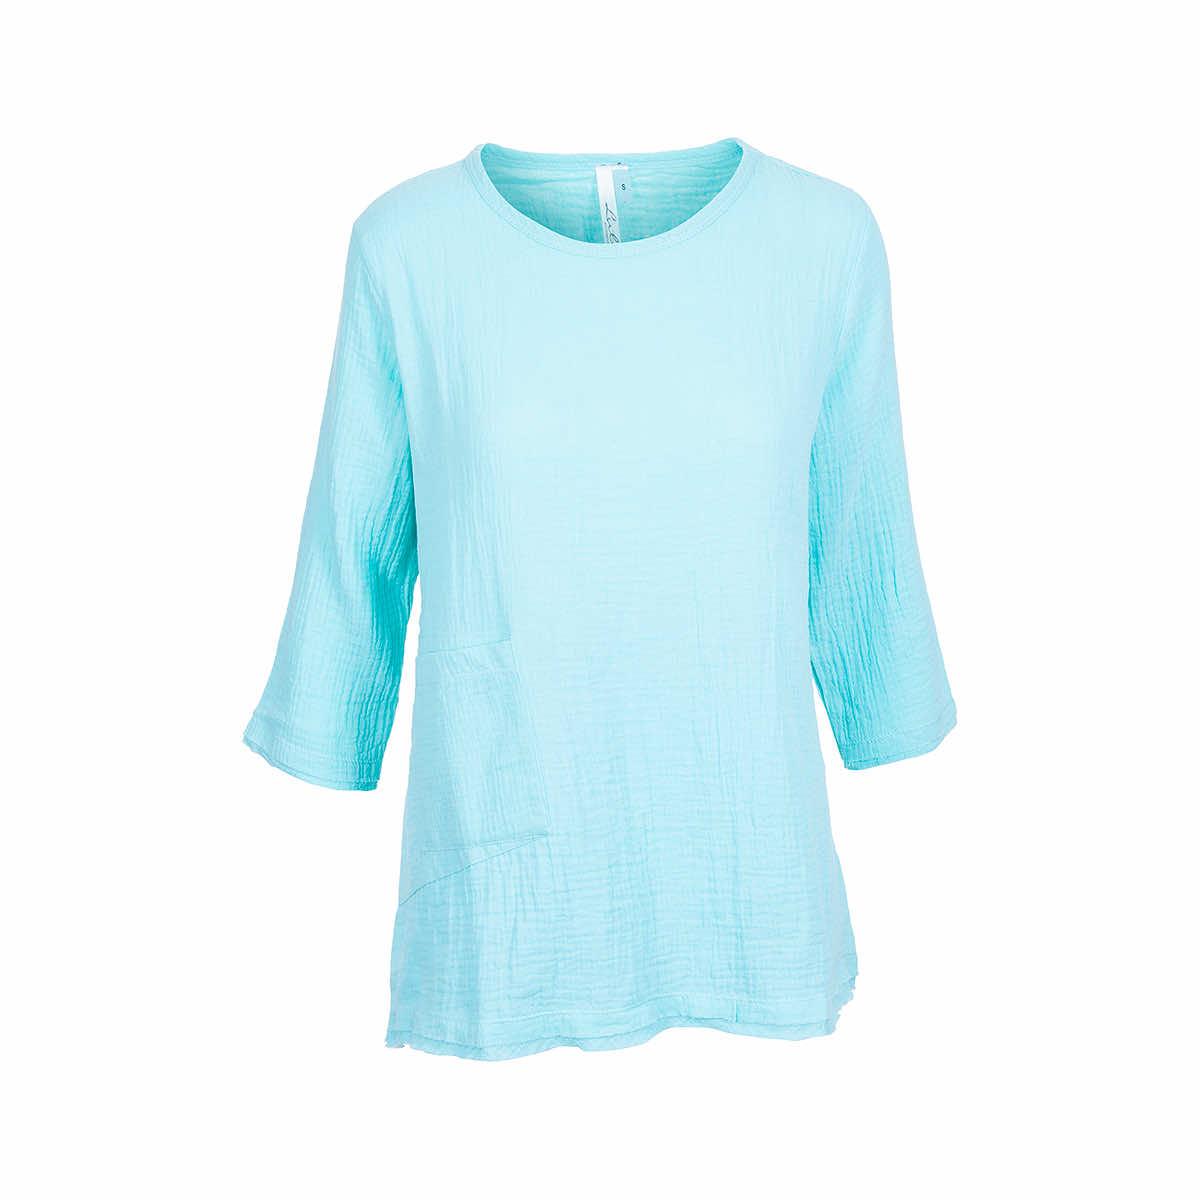 Mast General Store | Women's Gauze 3/4-Sleeve Top